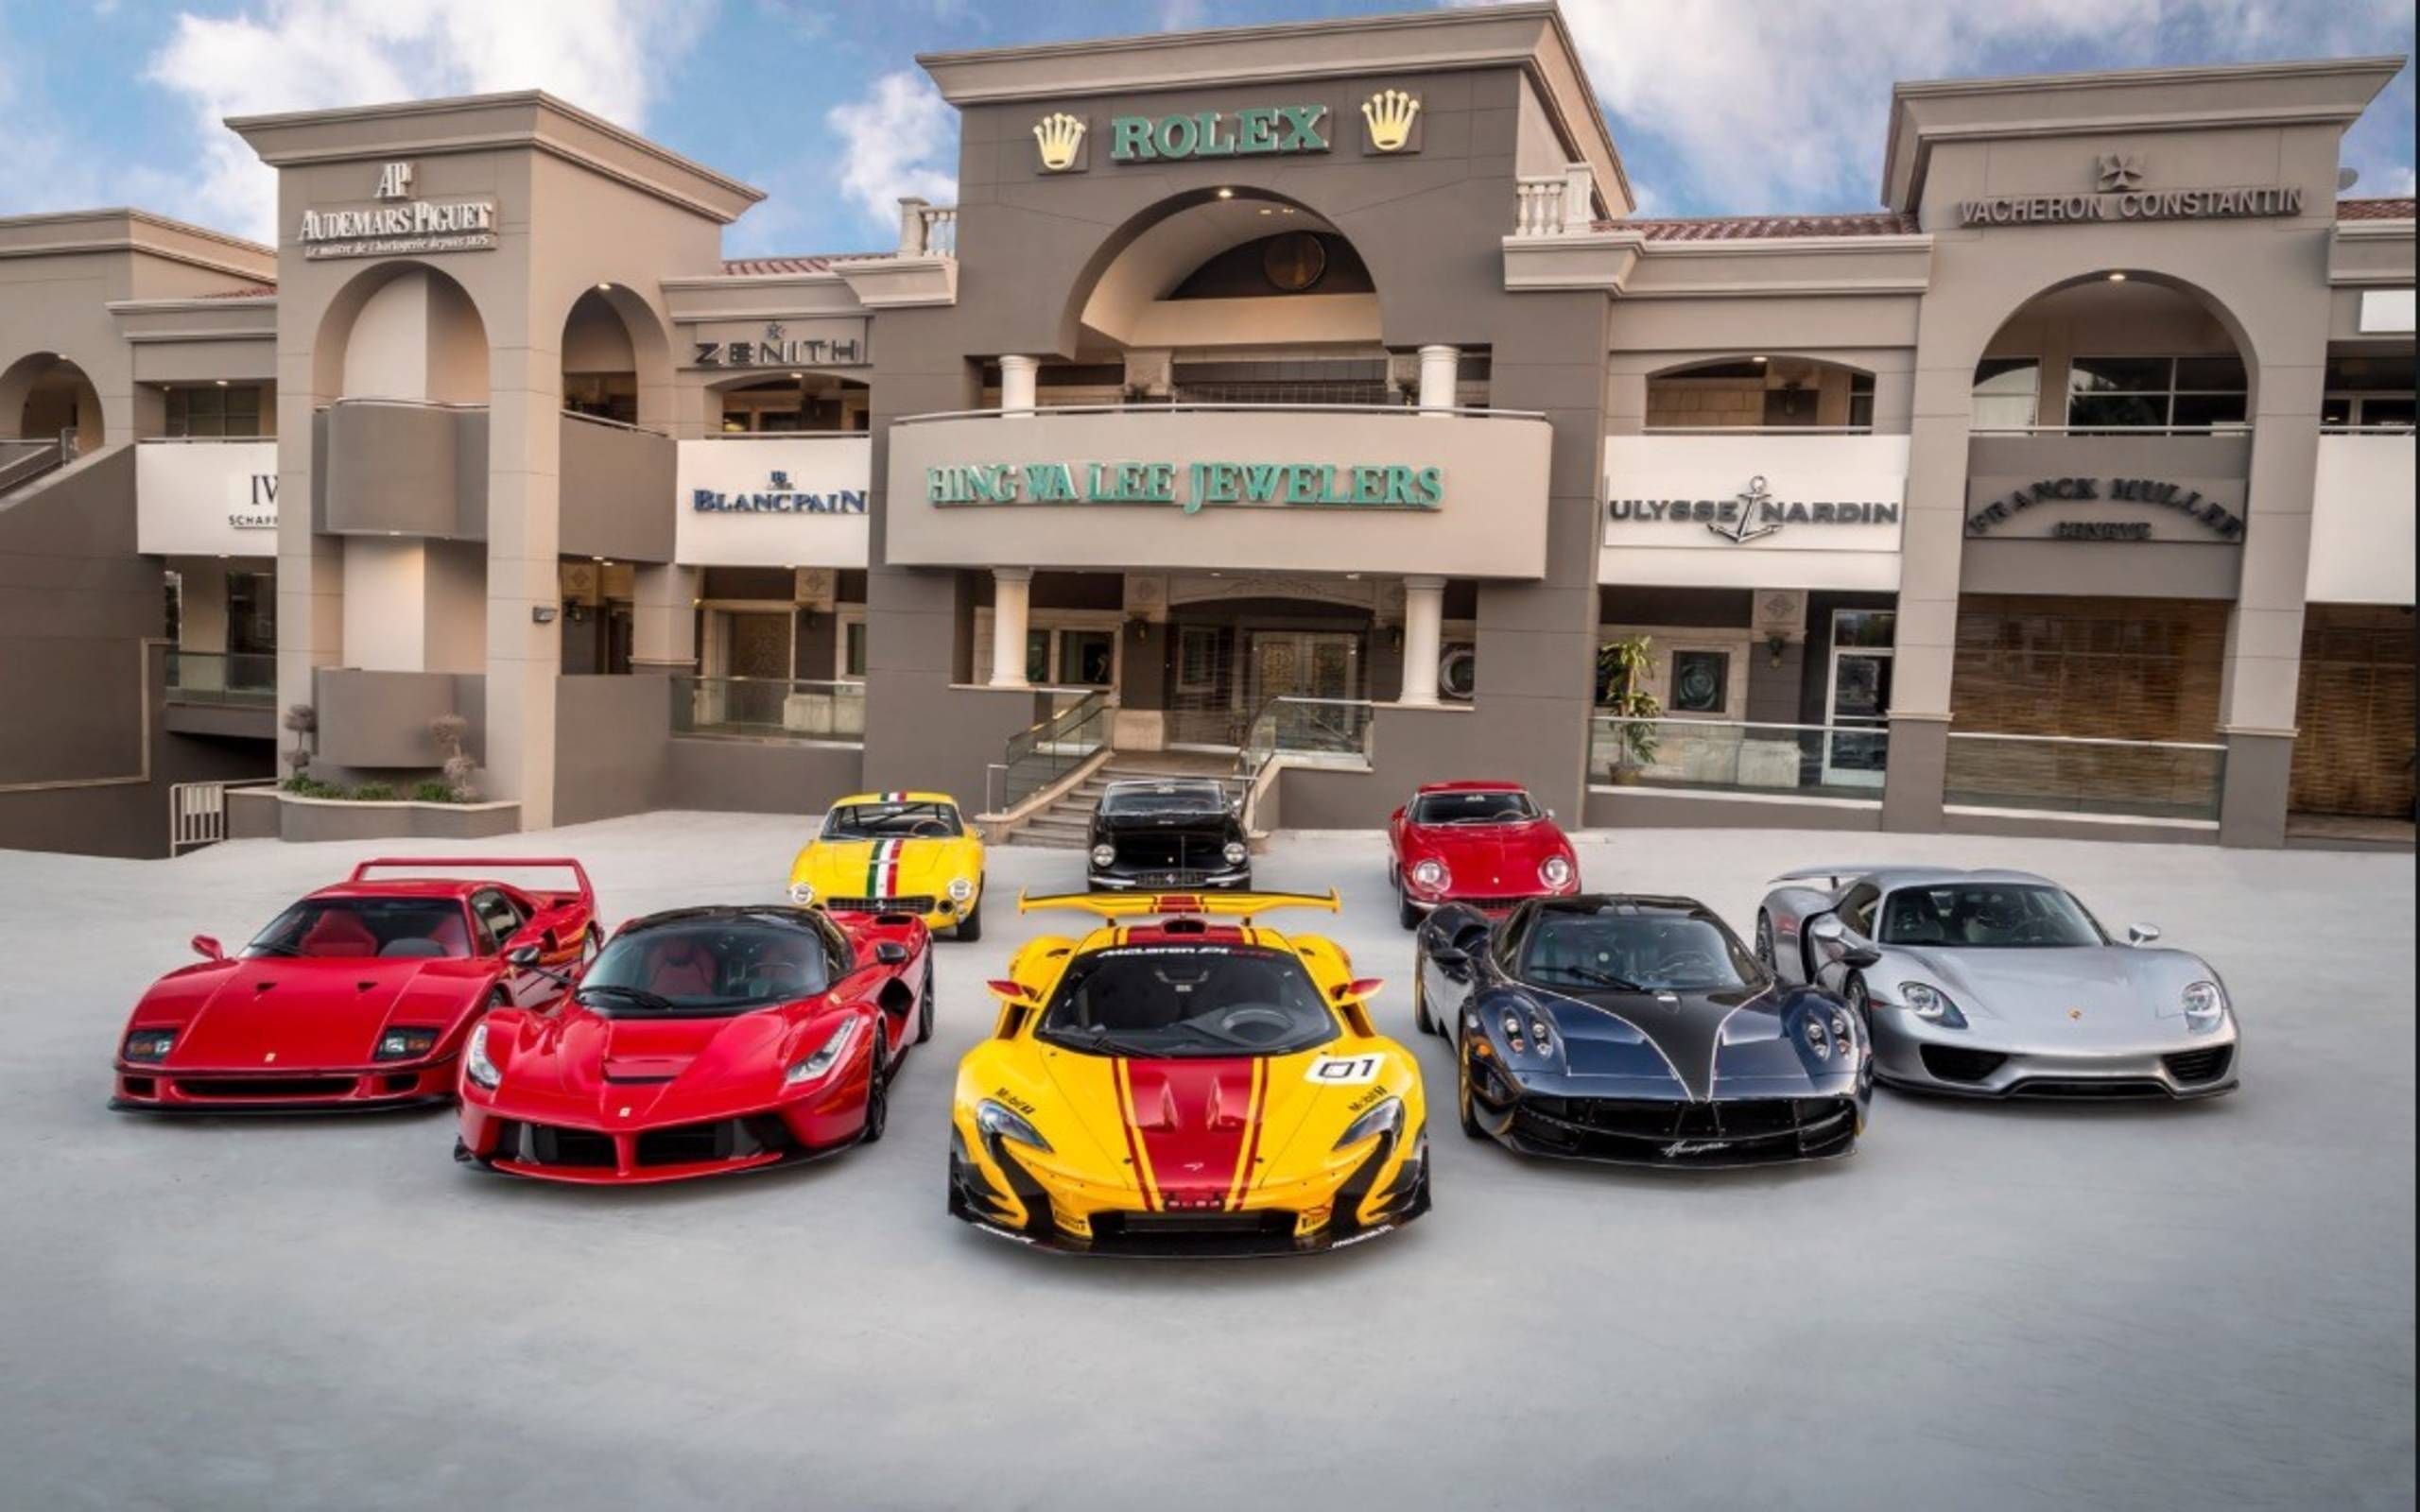 Gallery: David Lee's Ferraris